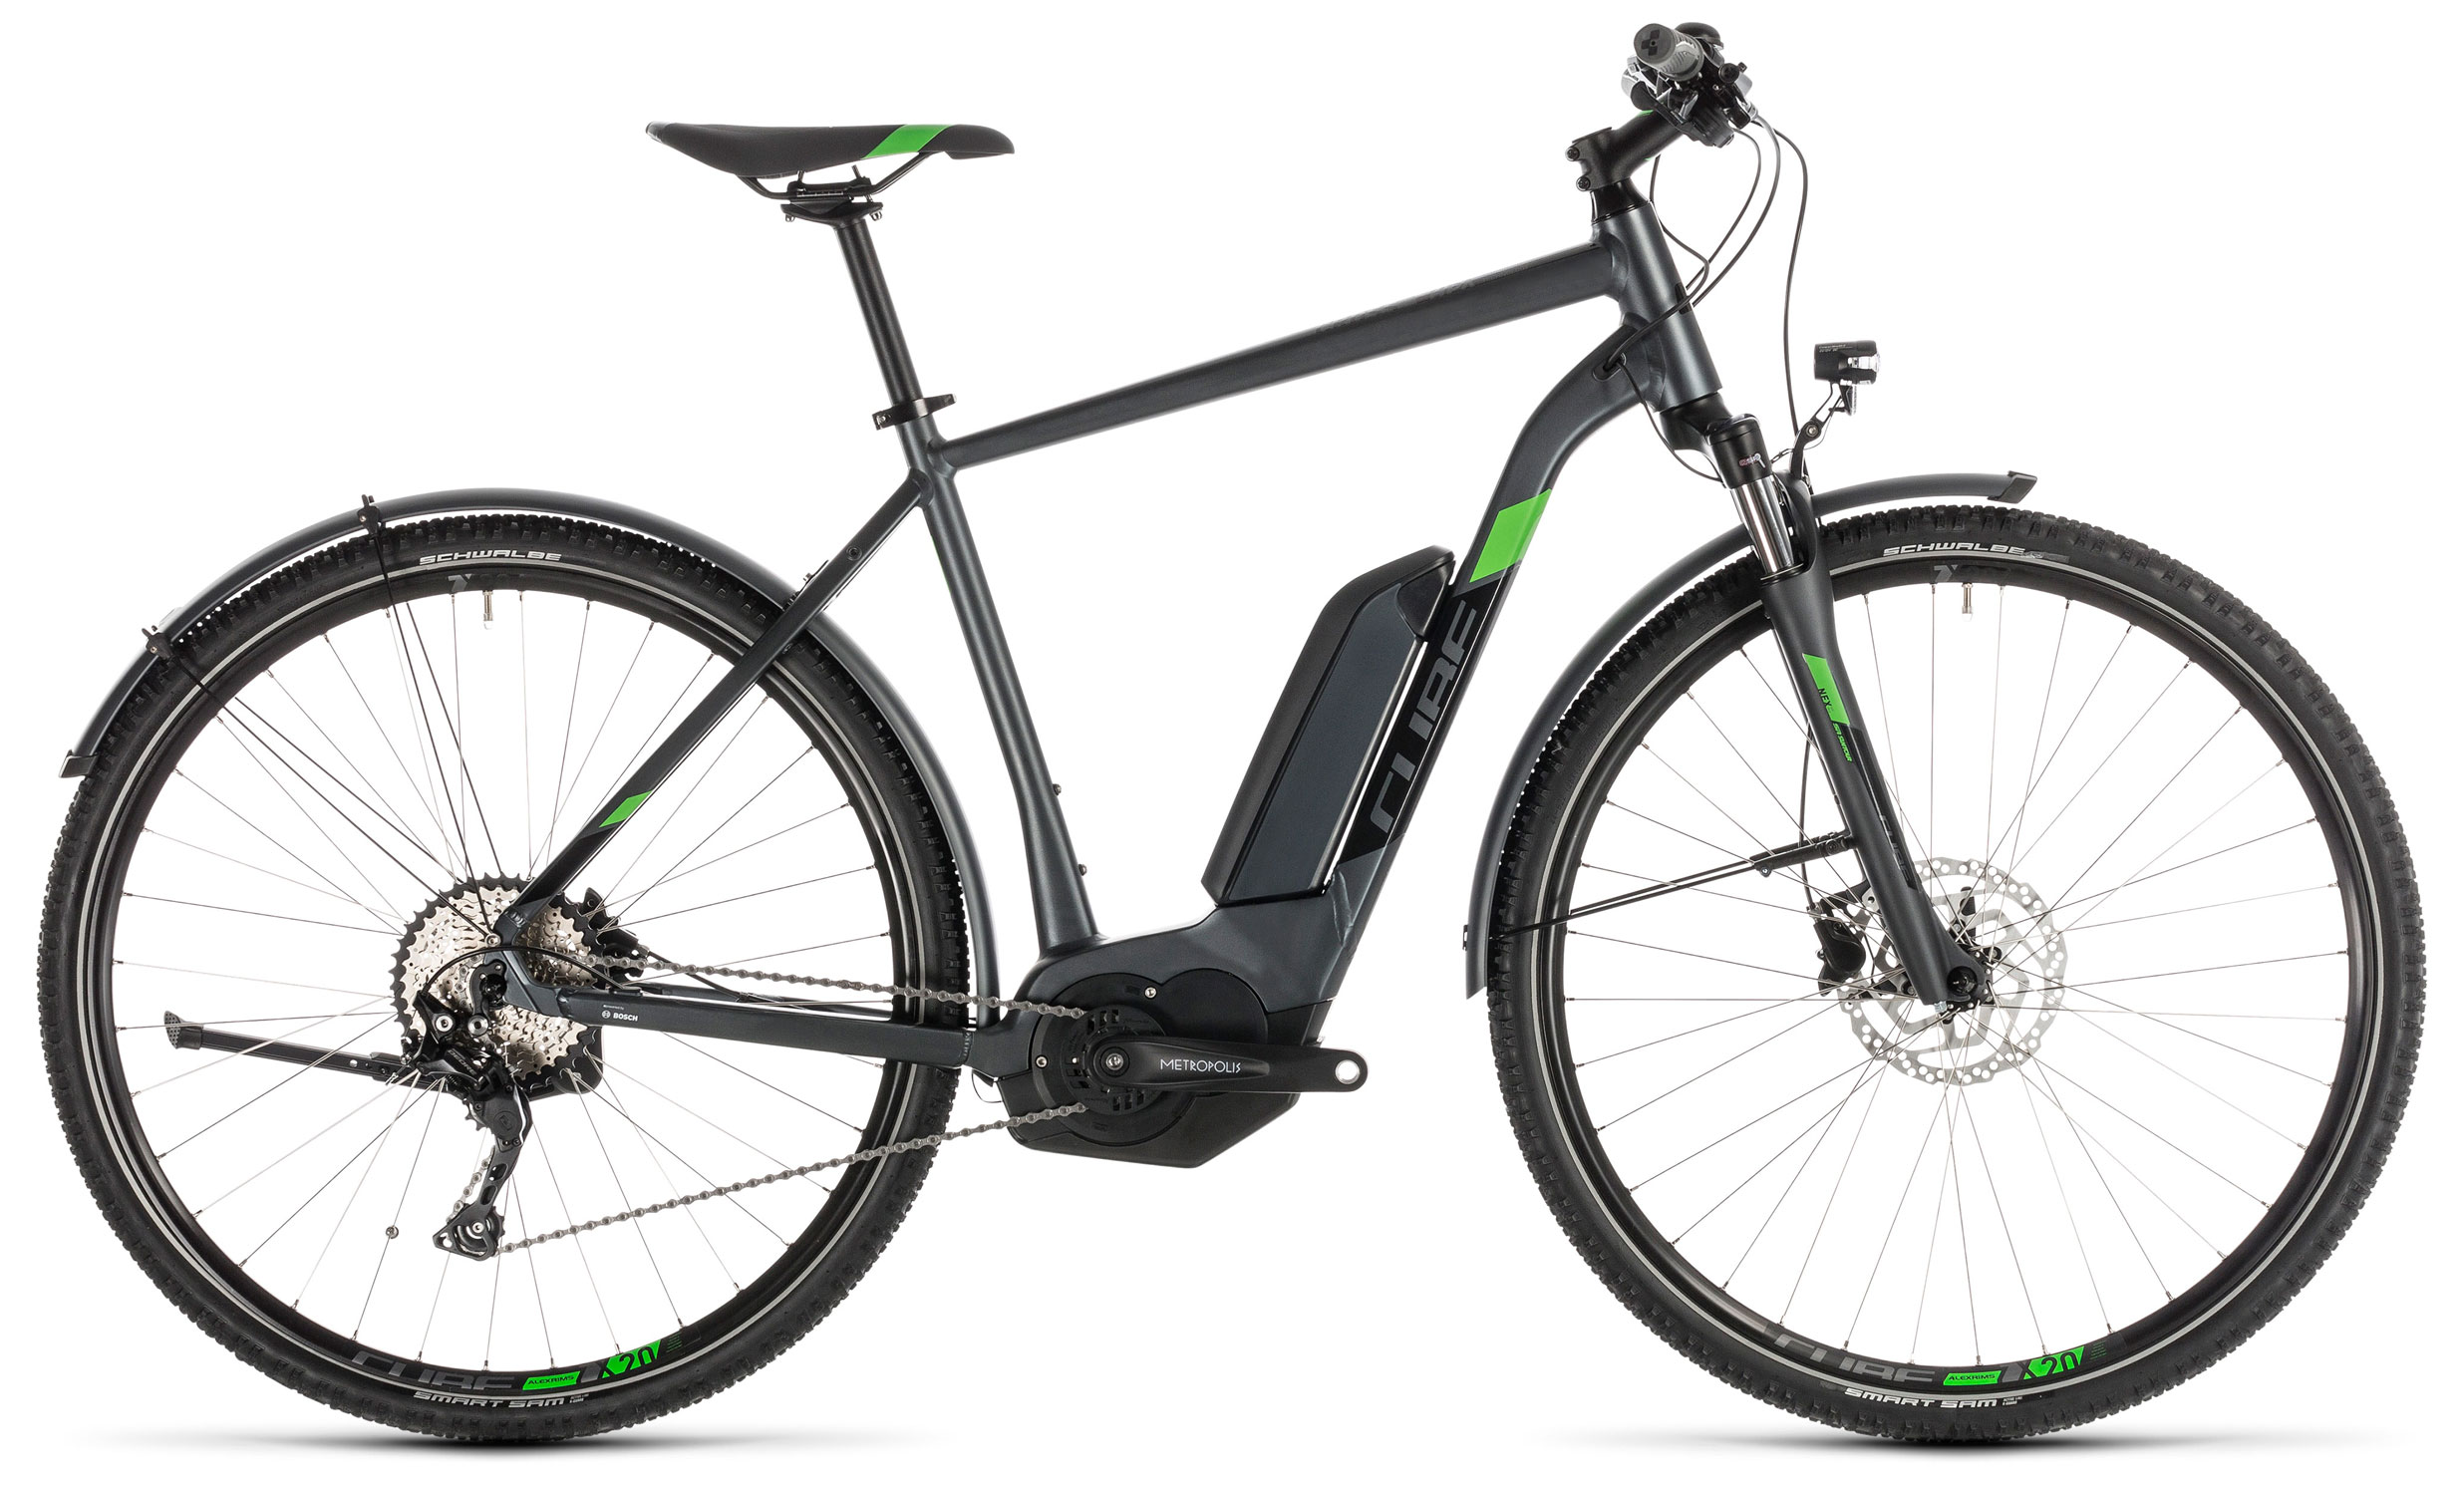  Отзывы о Электровелосипеде Cube Cross Hybrid Pro Allroad 400 2019